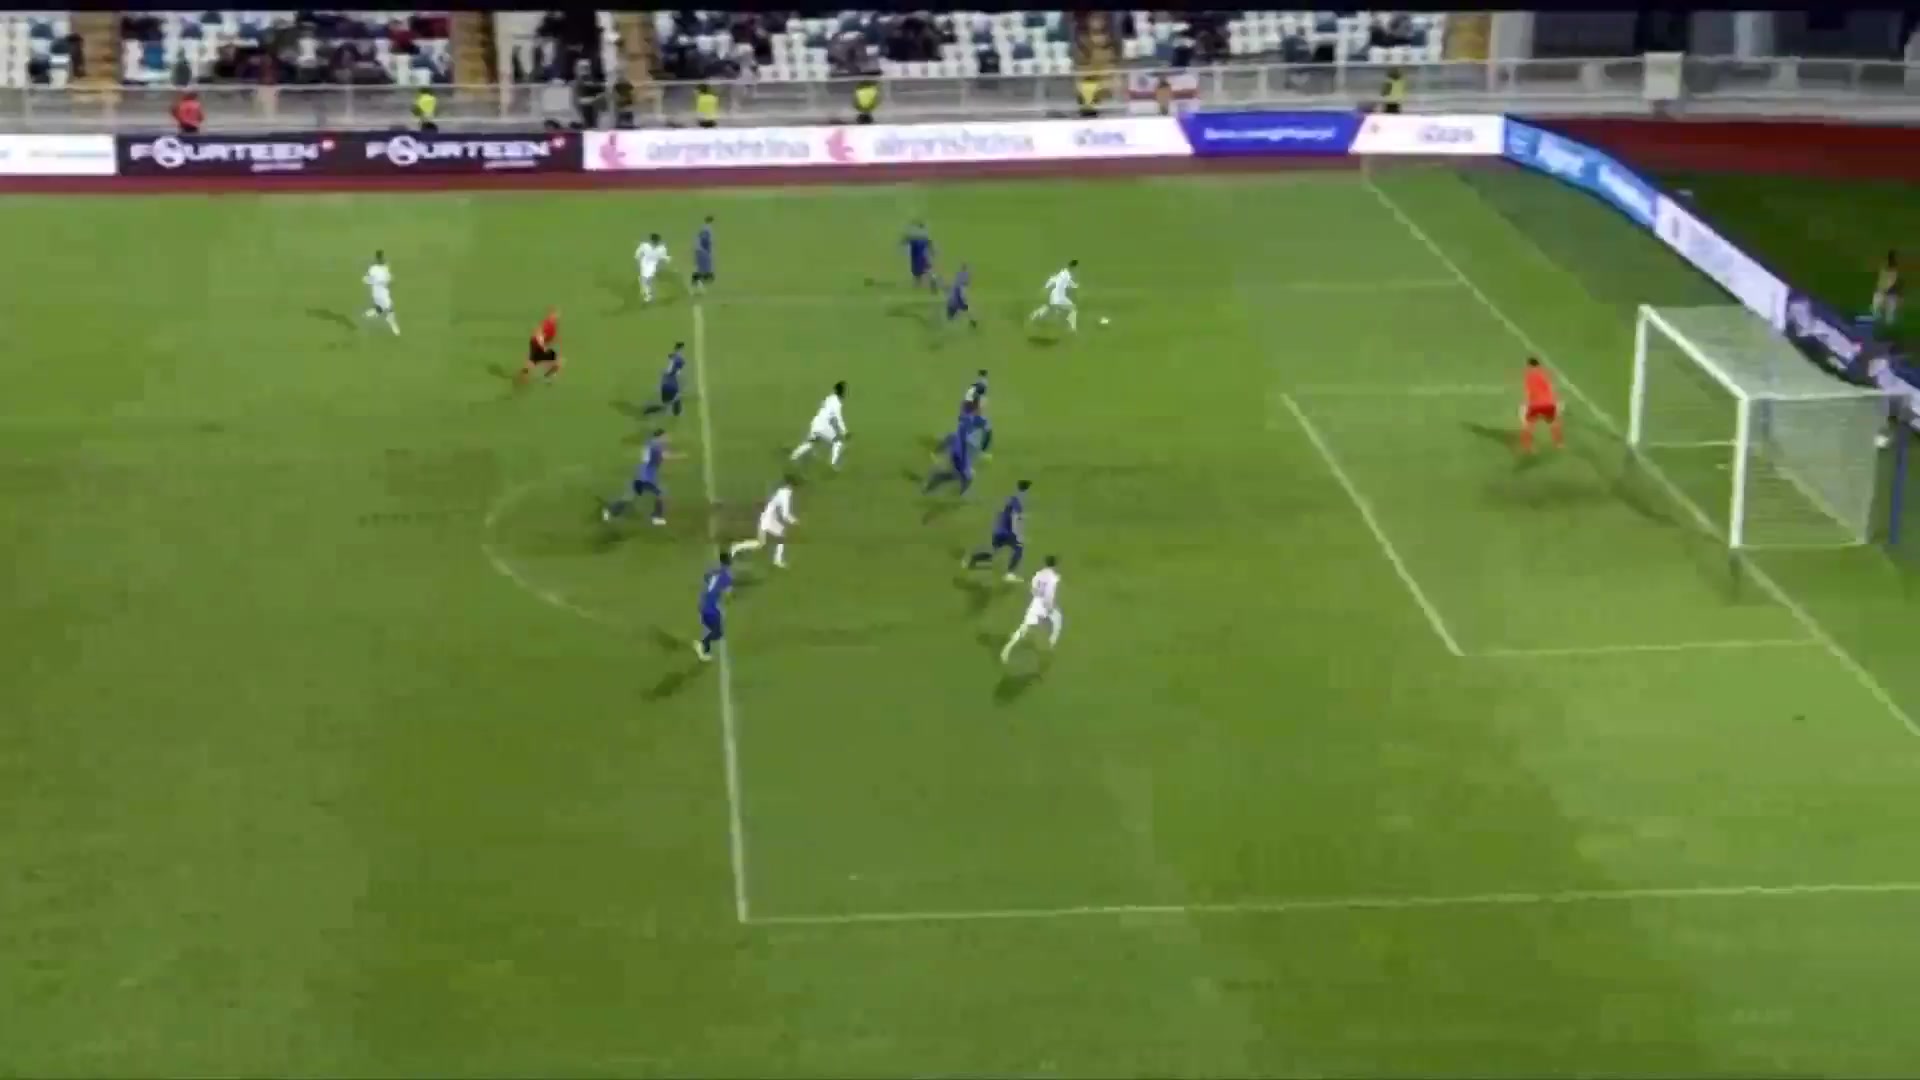 UEFA  U21Q Kosovo U21 Vs England U21 Krasniqi I. Goal in 83 min, Score 0:5